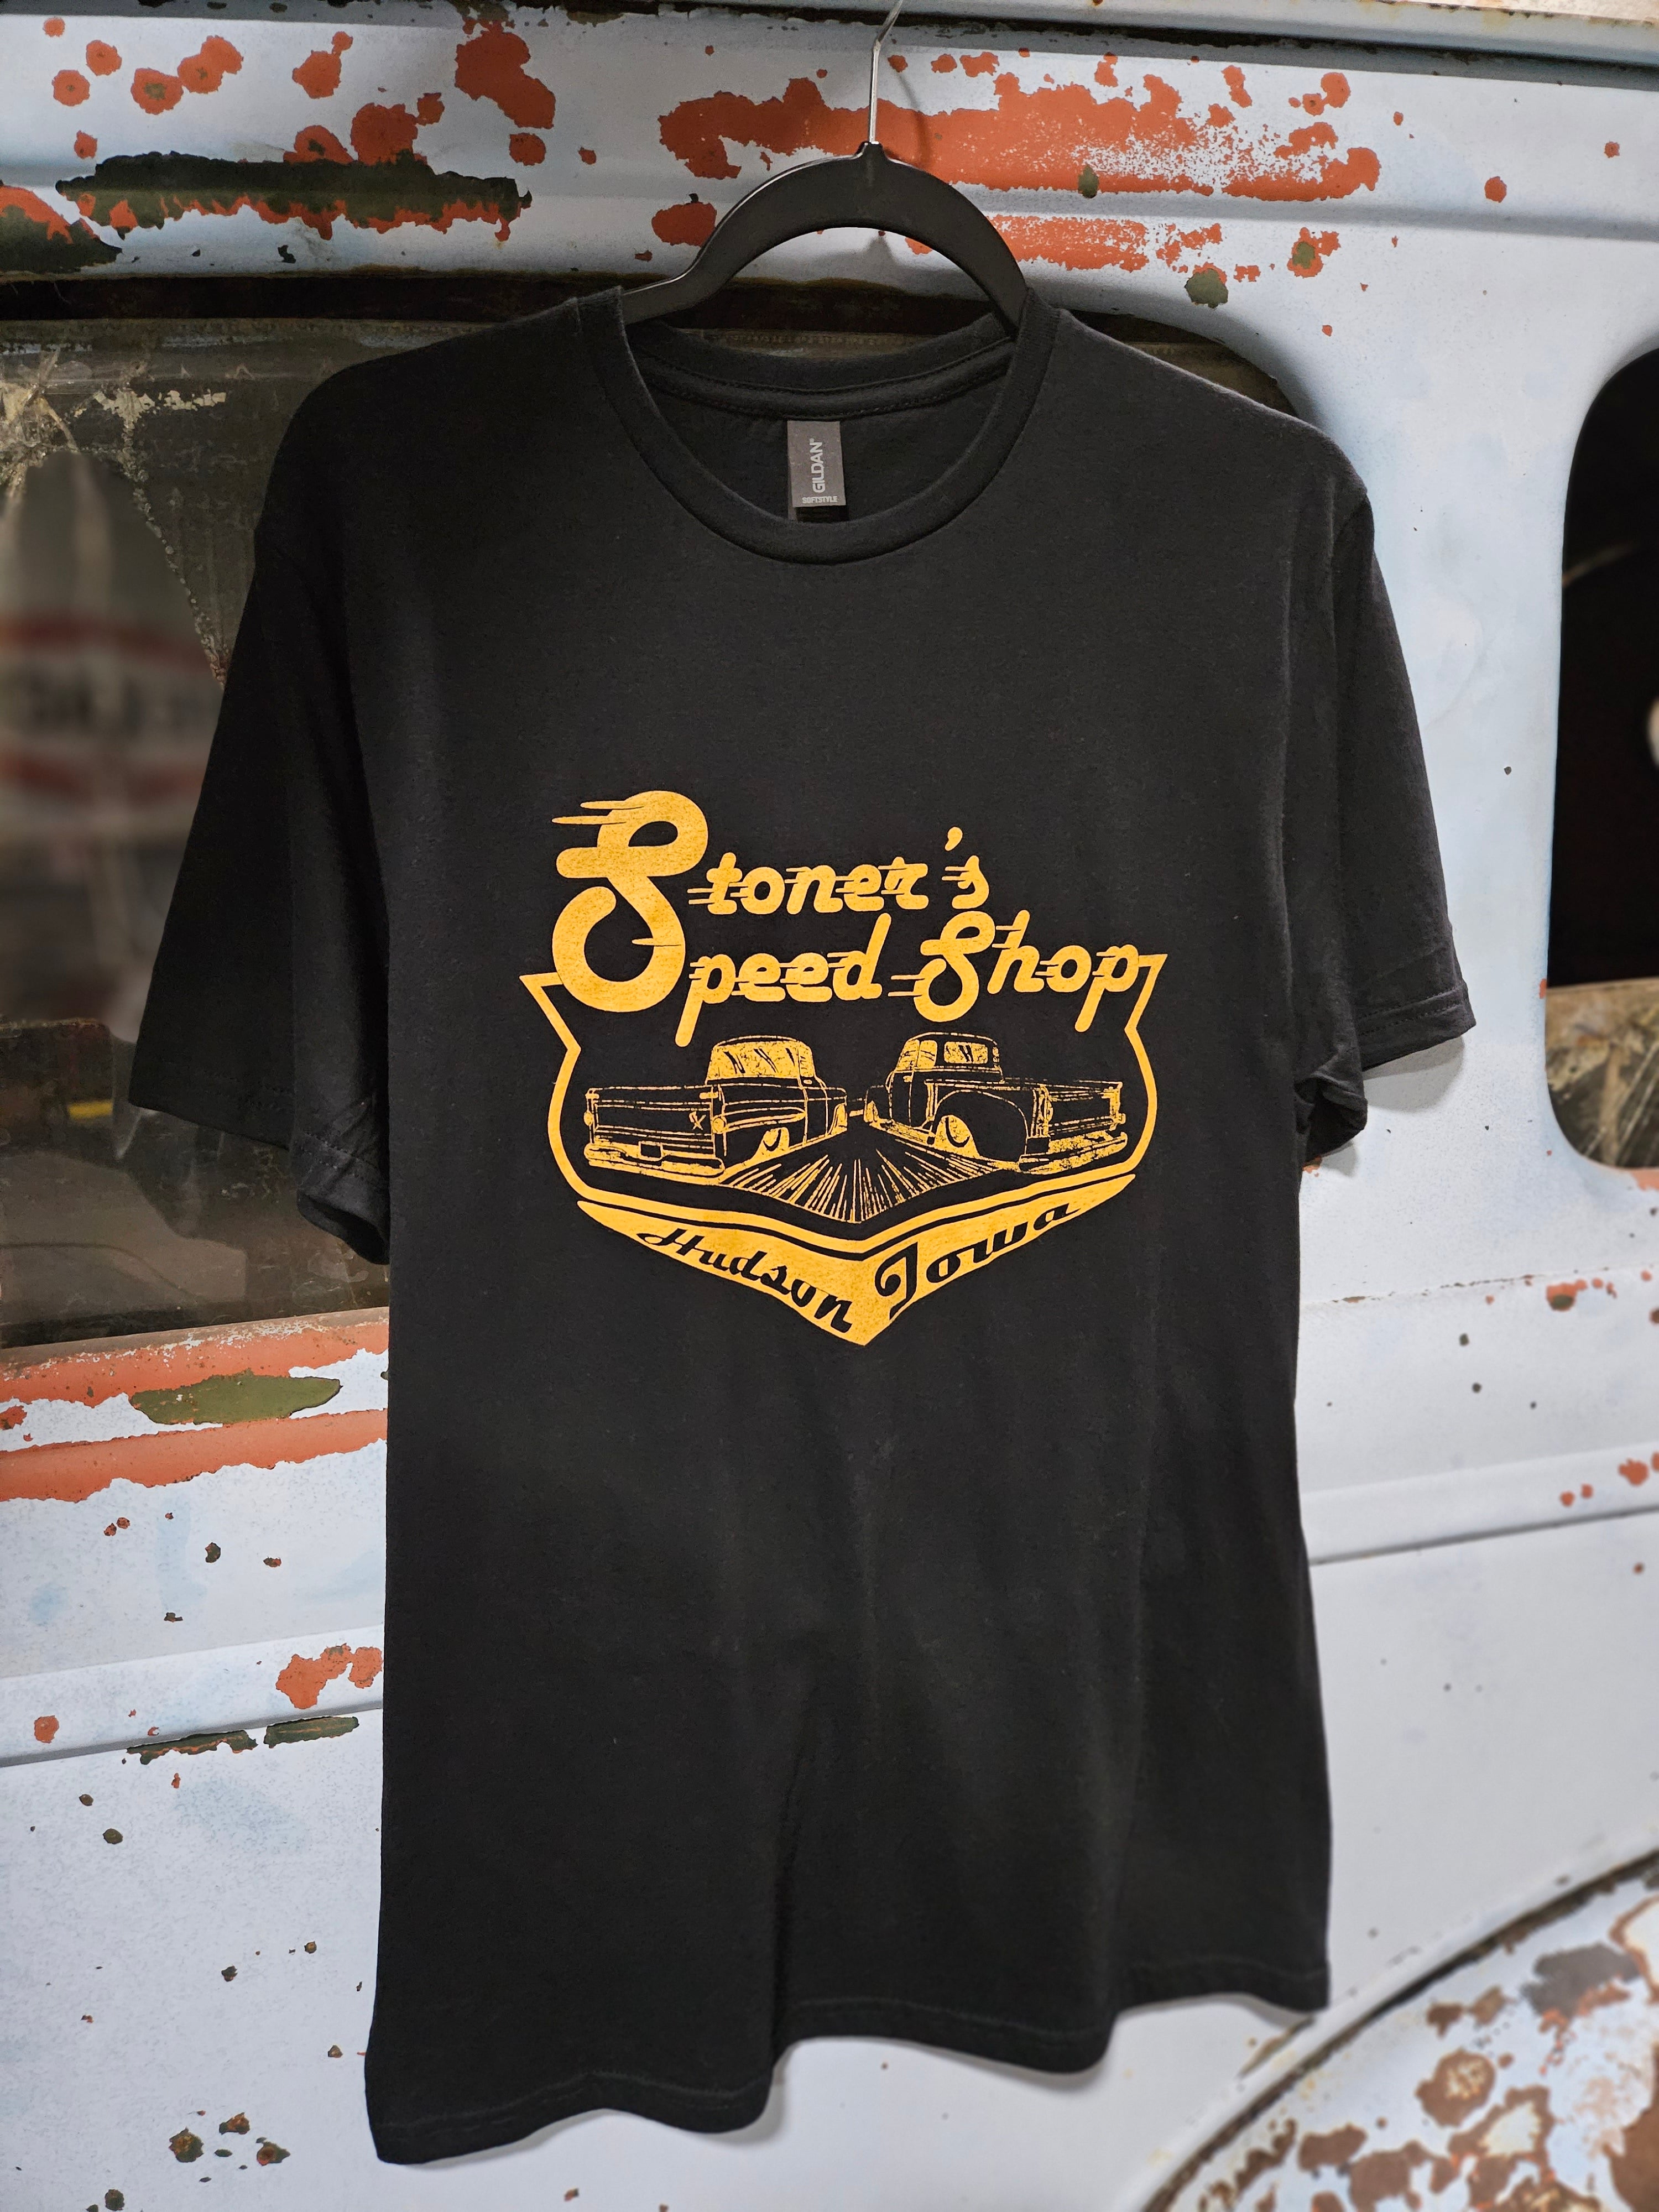 Stoner's Speed Shop Black big logo T-Shirt